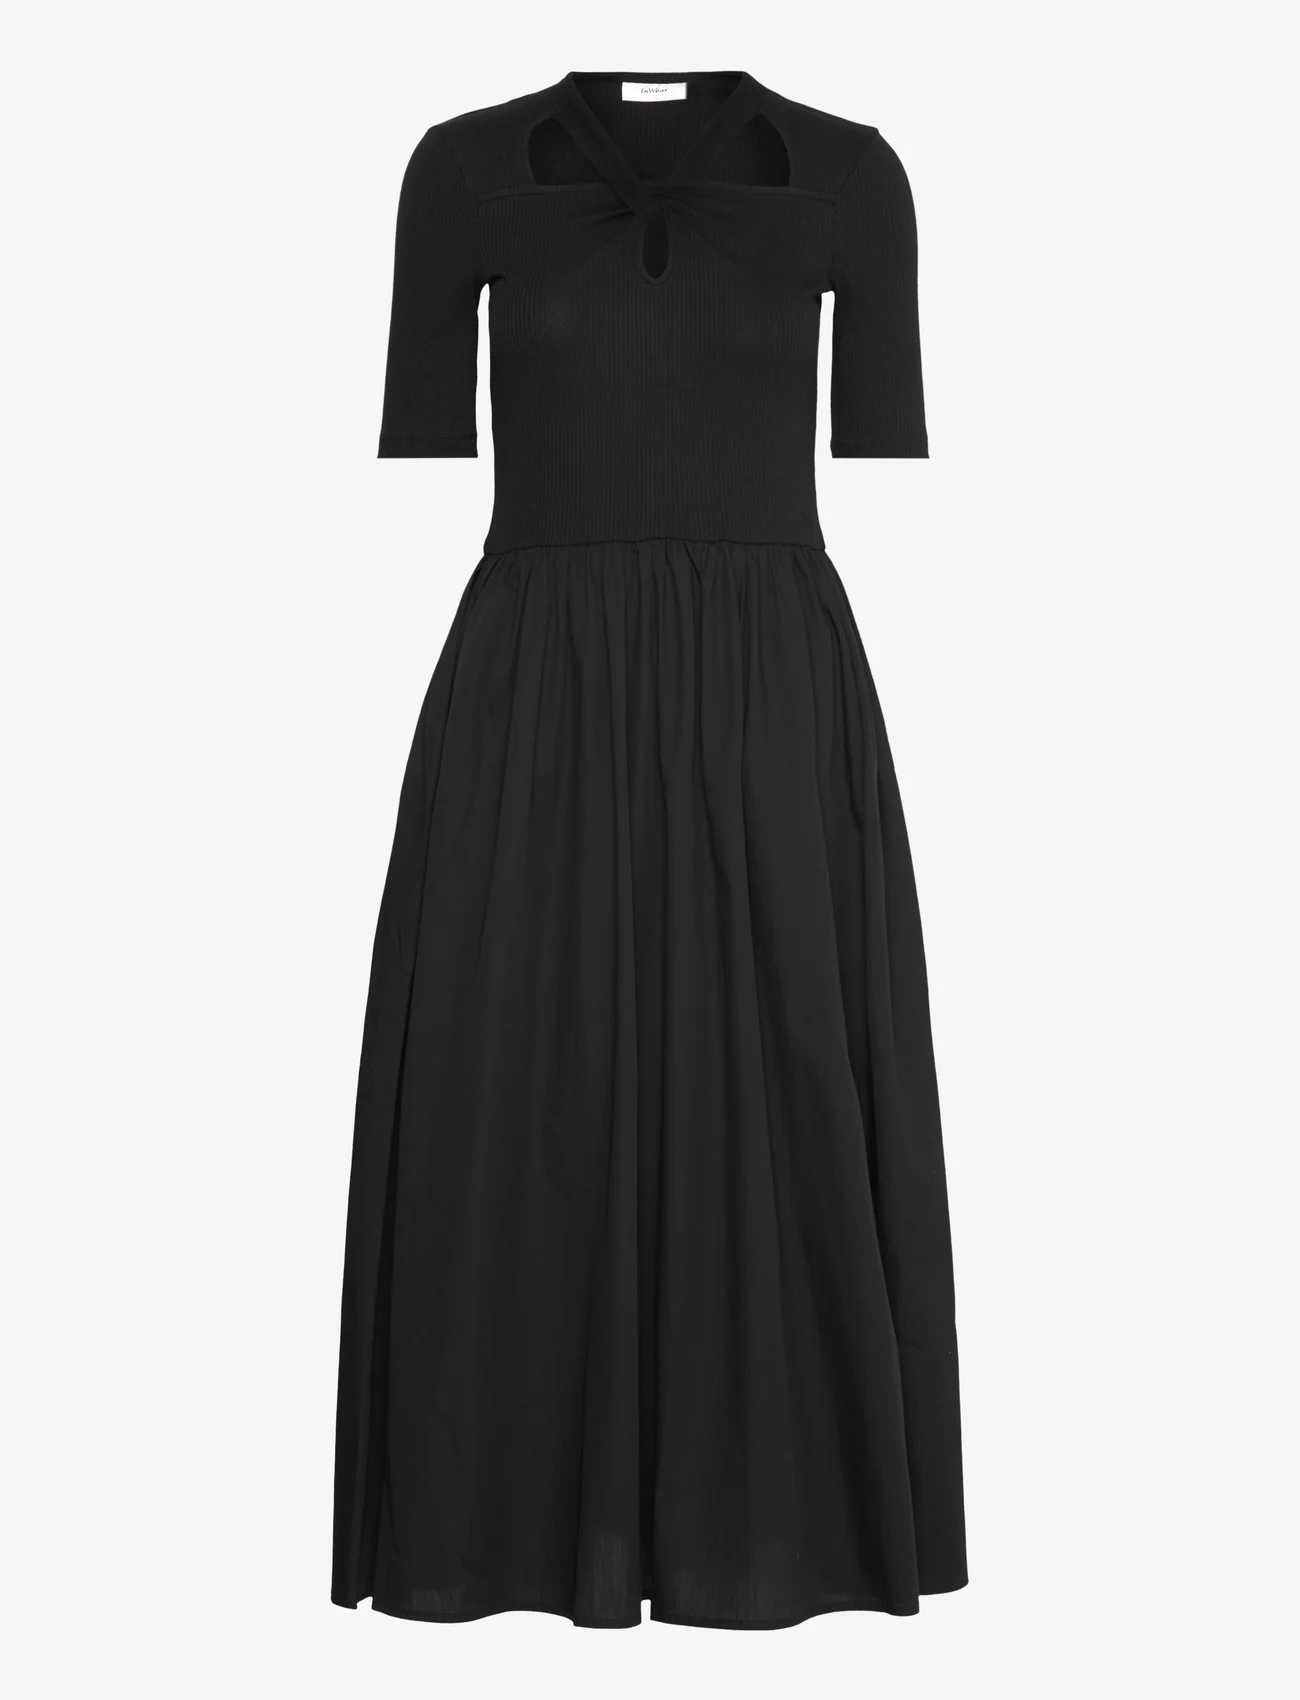 InWear - PukIW Dress - strikkjoler - black - 0